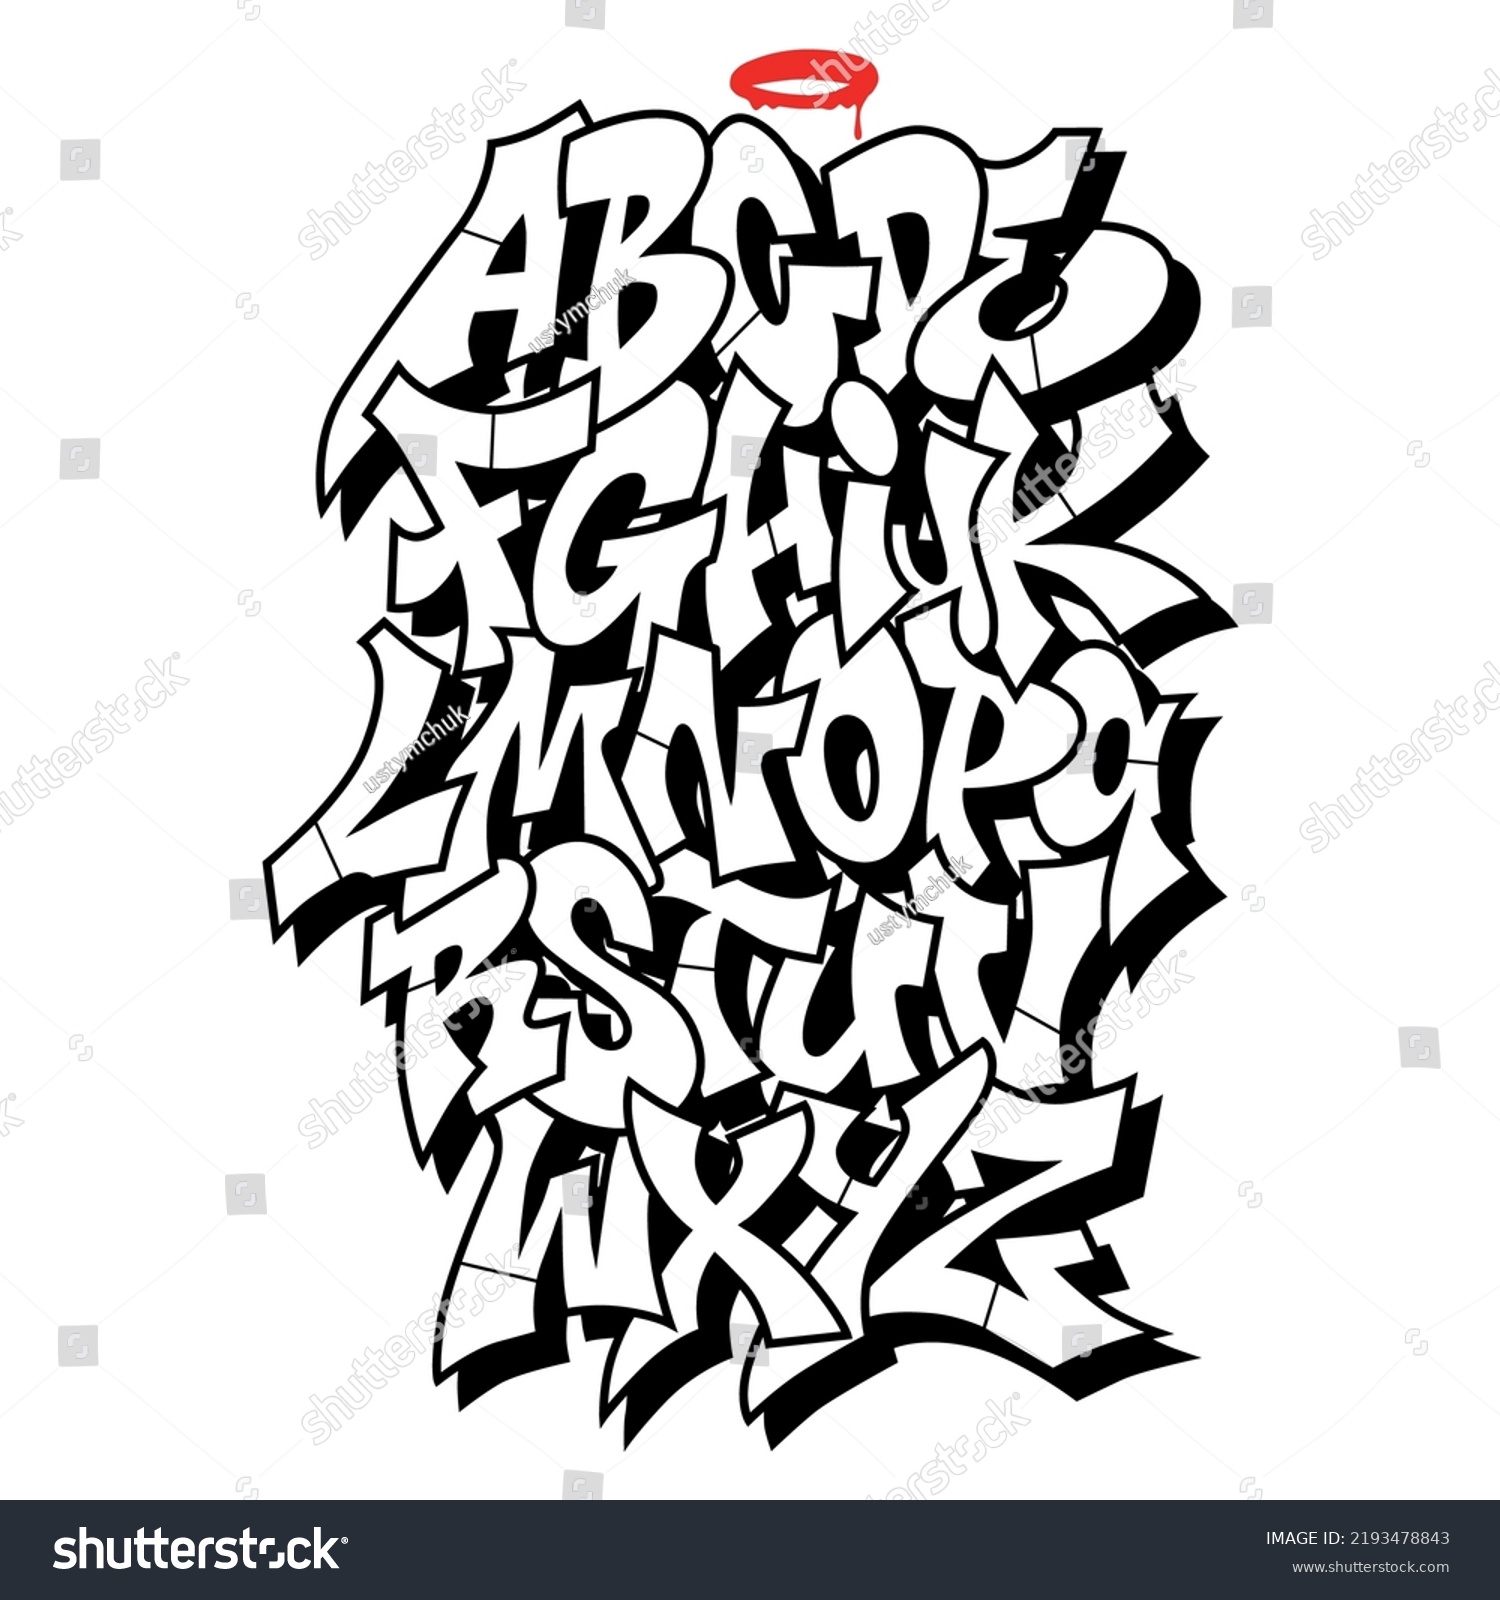 abecedario en graffiti wildstyle